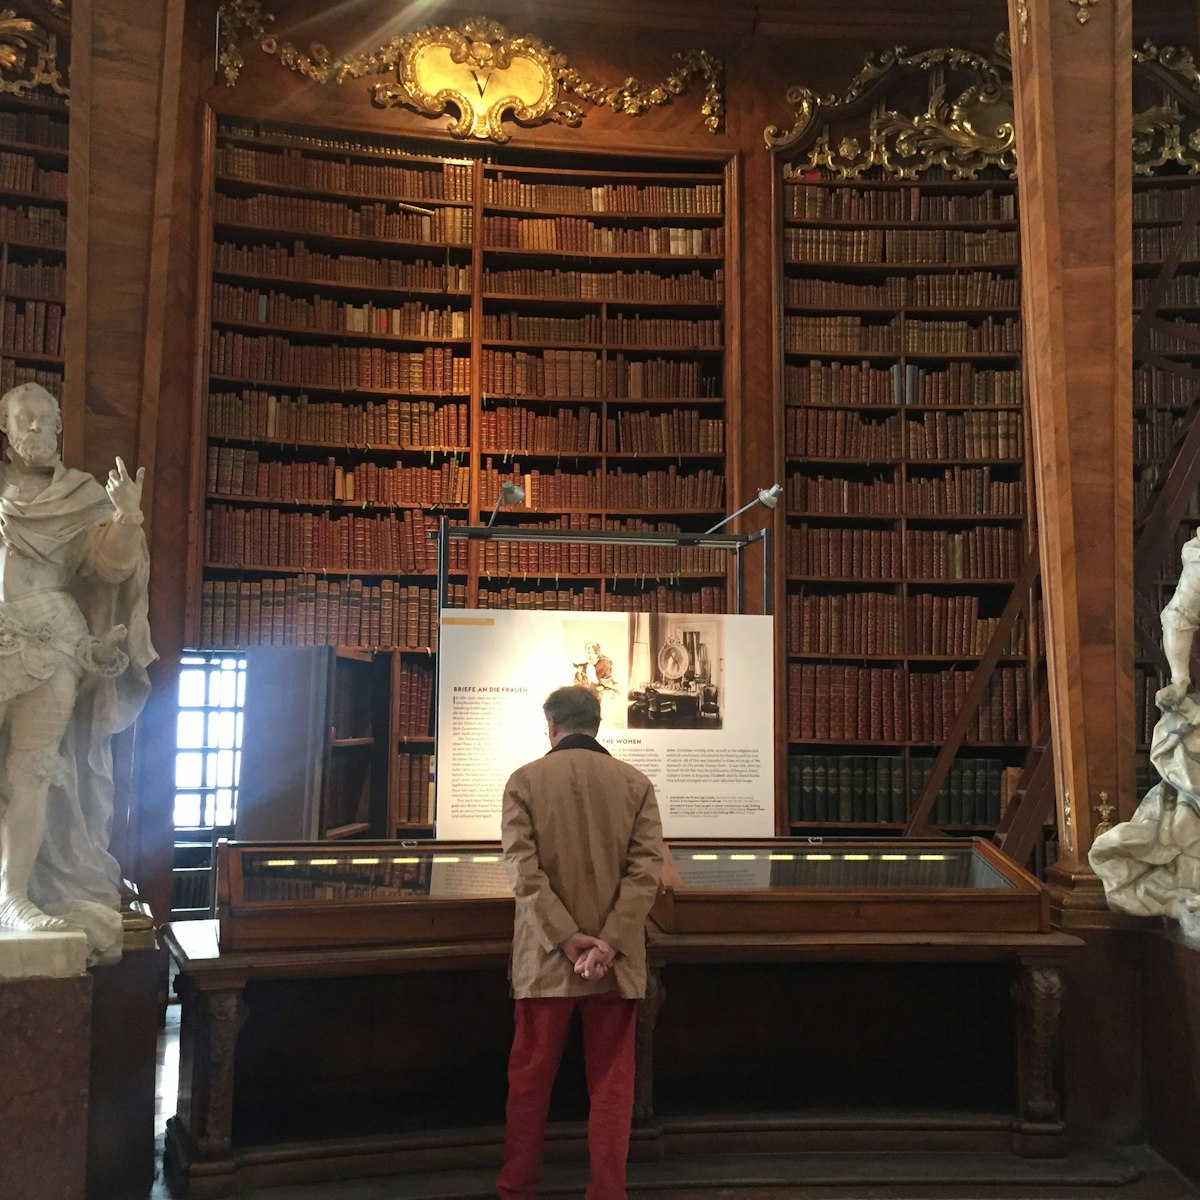 National library, Vienna - interior bookshelves